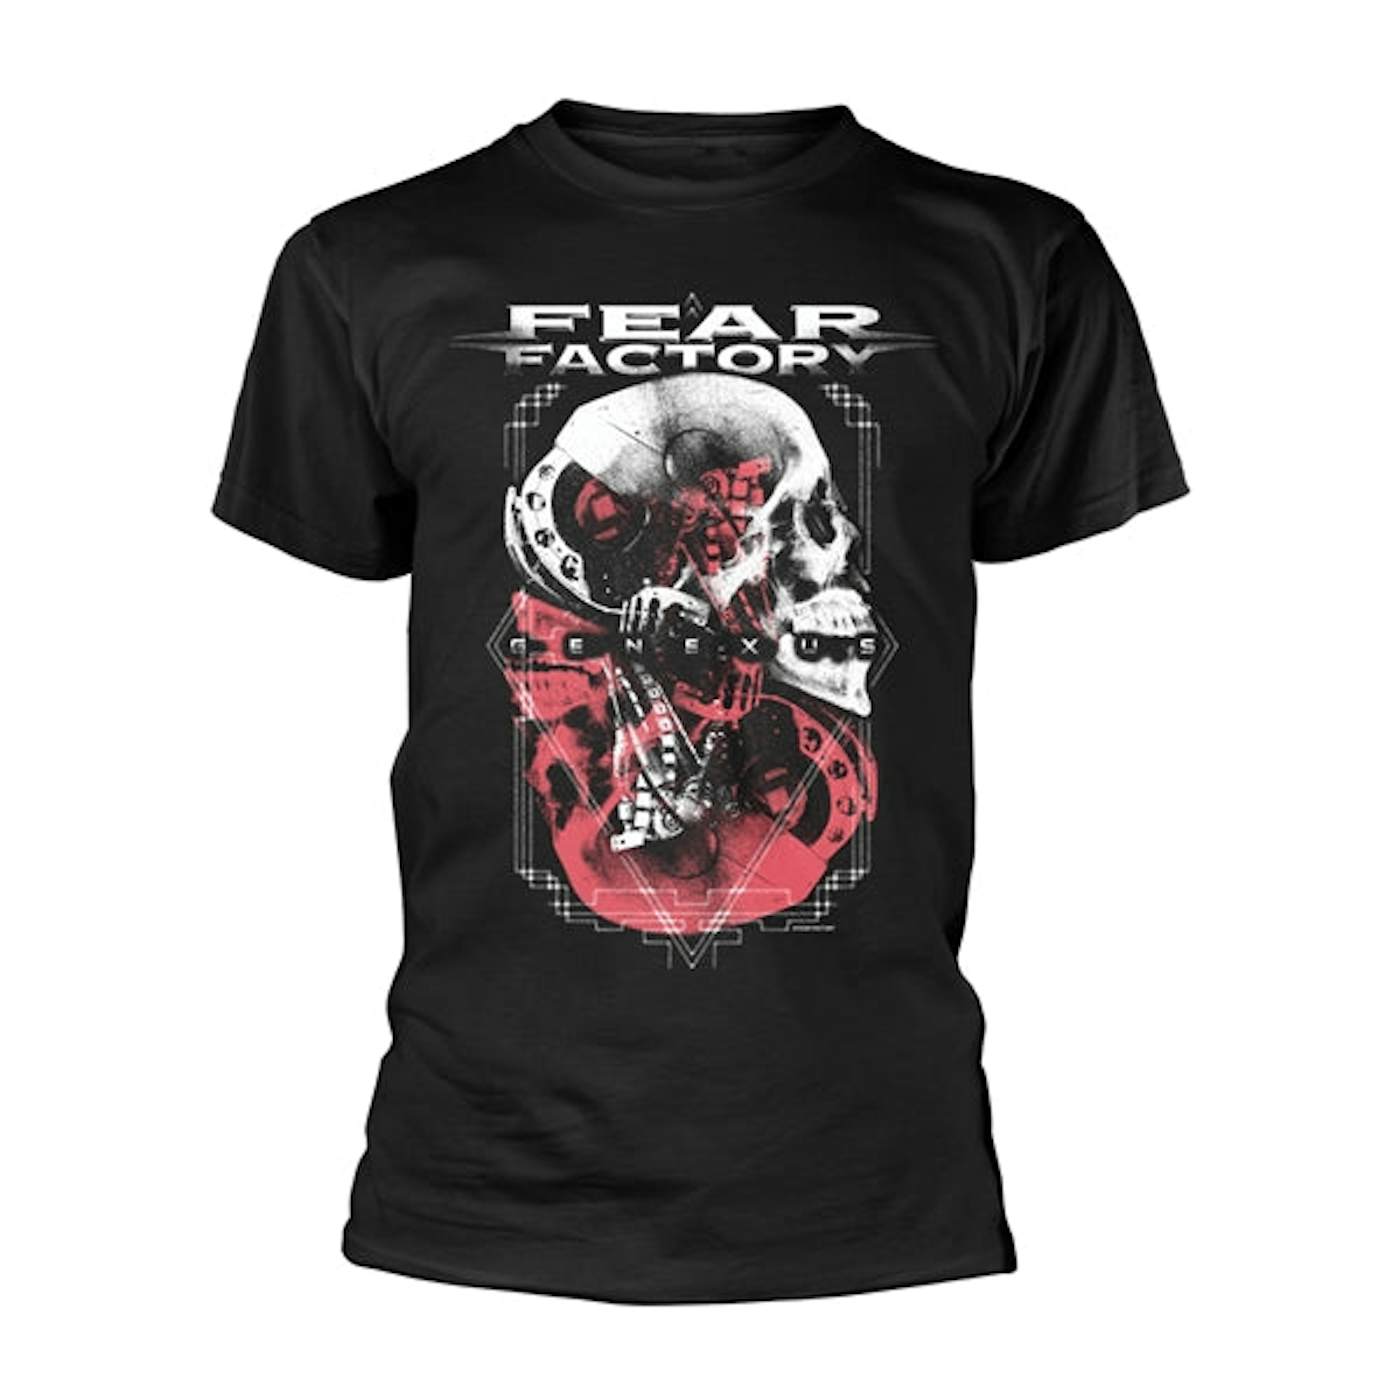 Fear Factory T-Shirt - Genexus Skull Poster